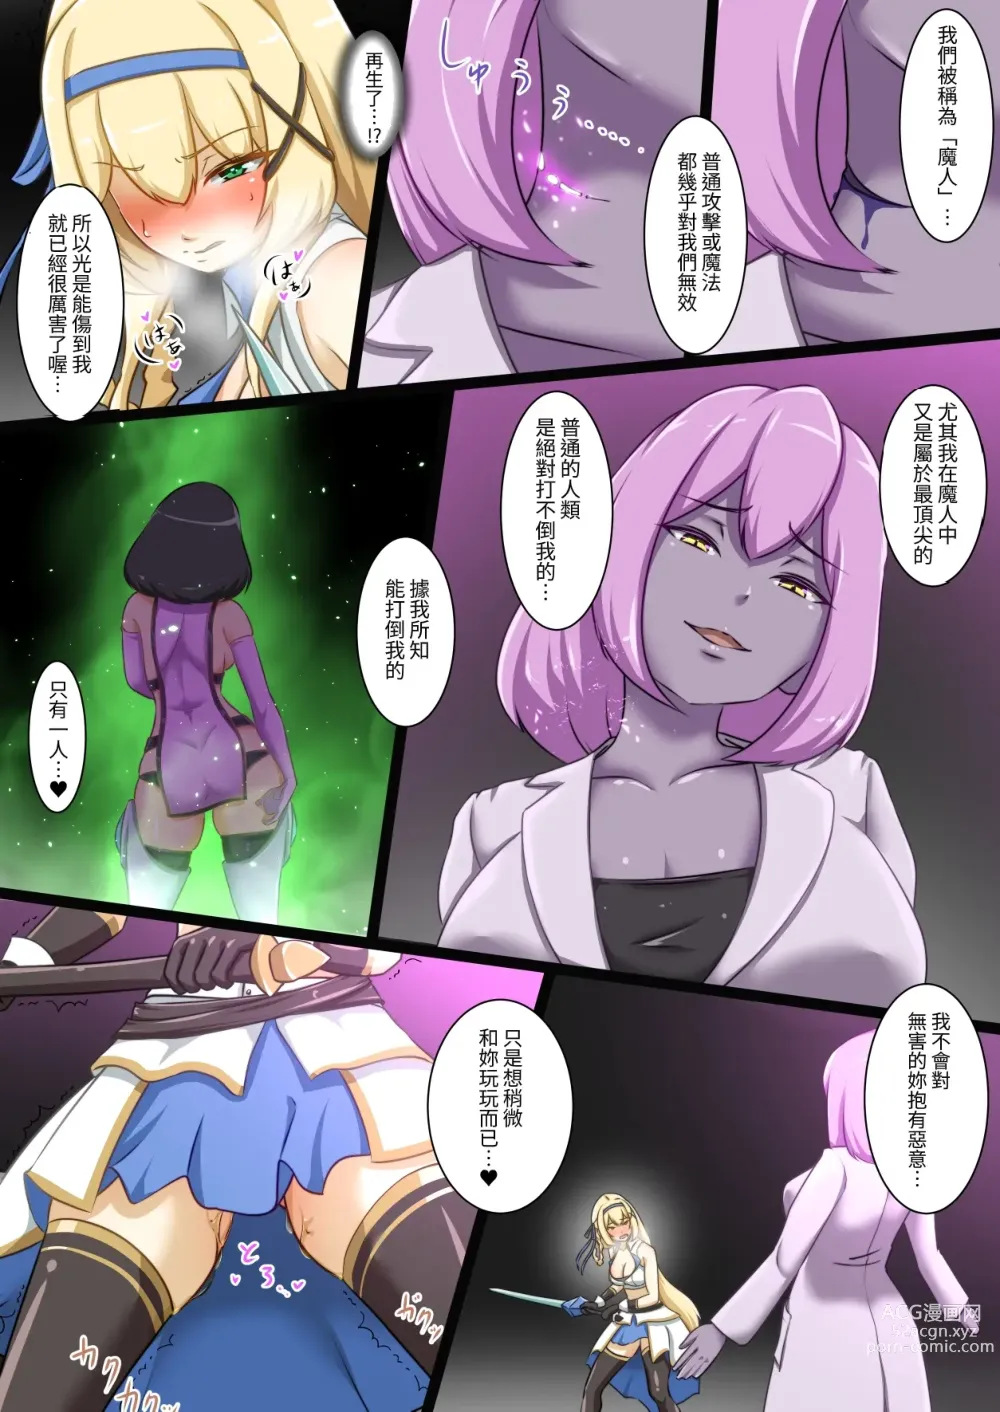 Page 9 of doujinshi 公主骑士与色色敌人战斗并败北的故事